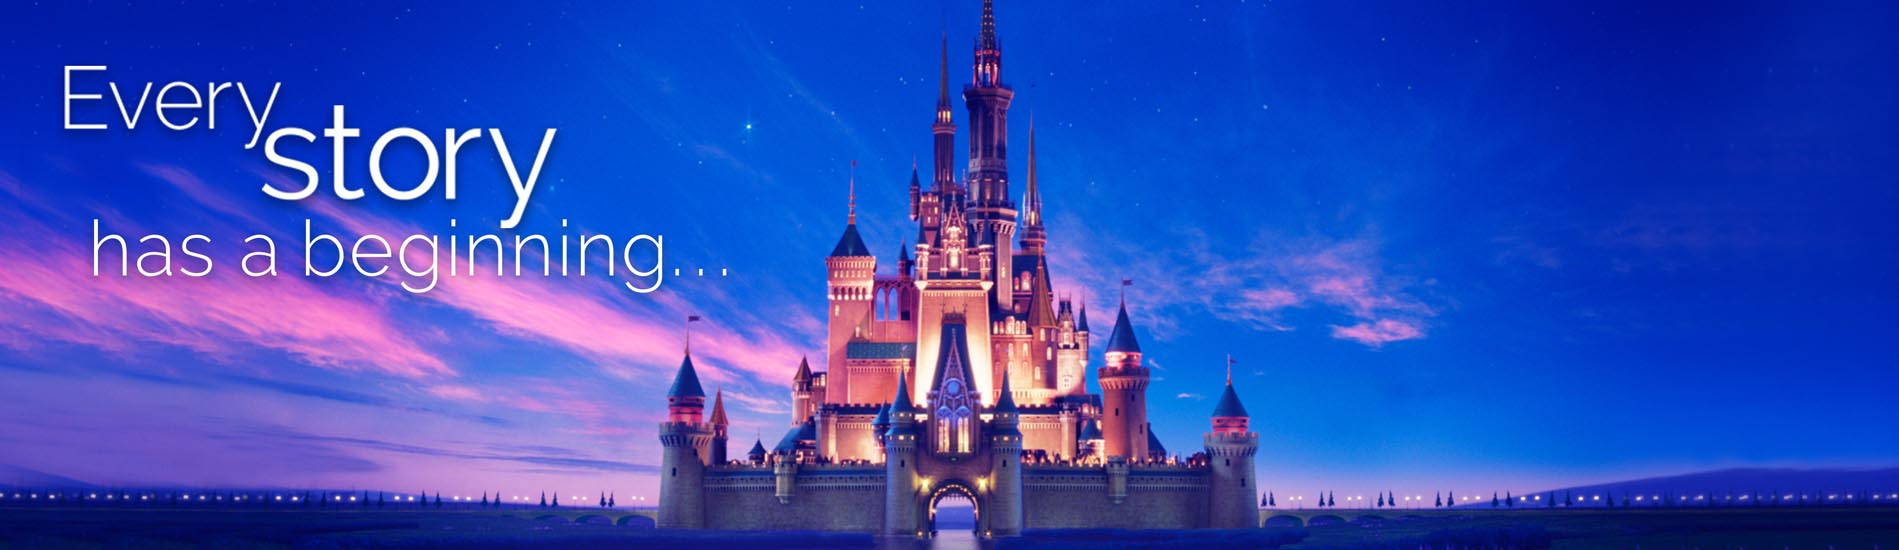 Every Story has a Beginning Walt Disney World castle